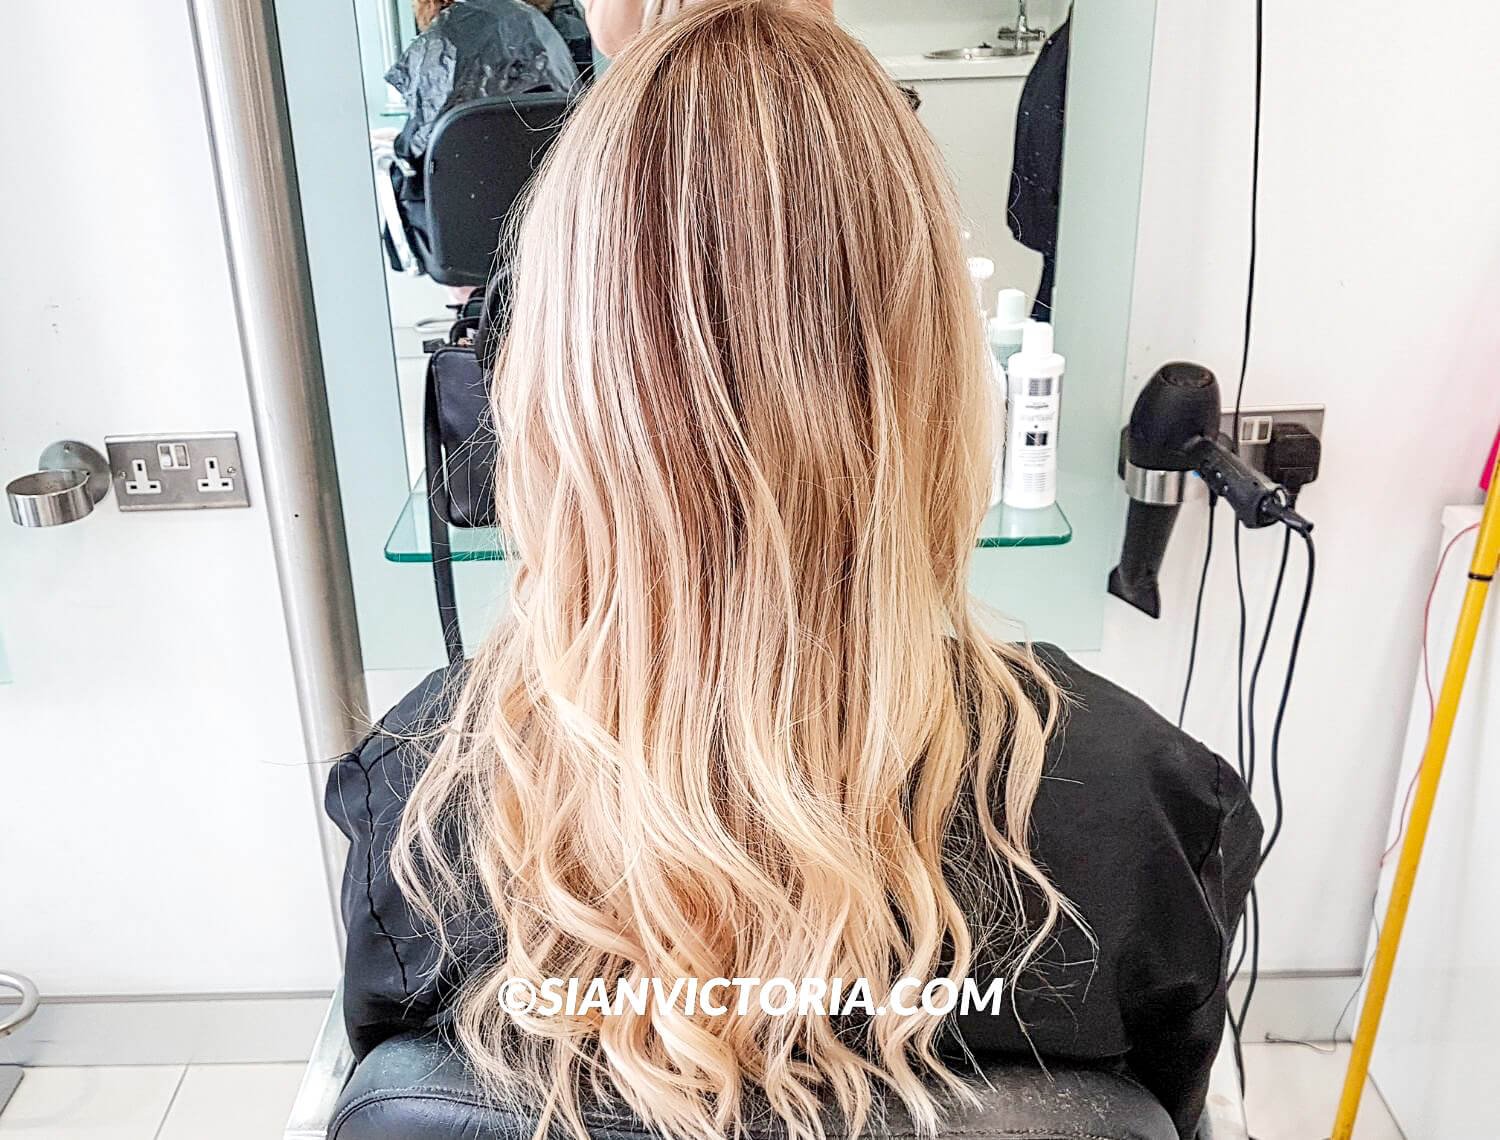 L'Oreal Colour Bonding Treatment at Regis Hair Salon — Sian Victoria.